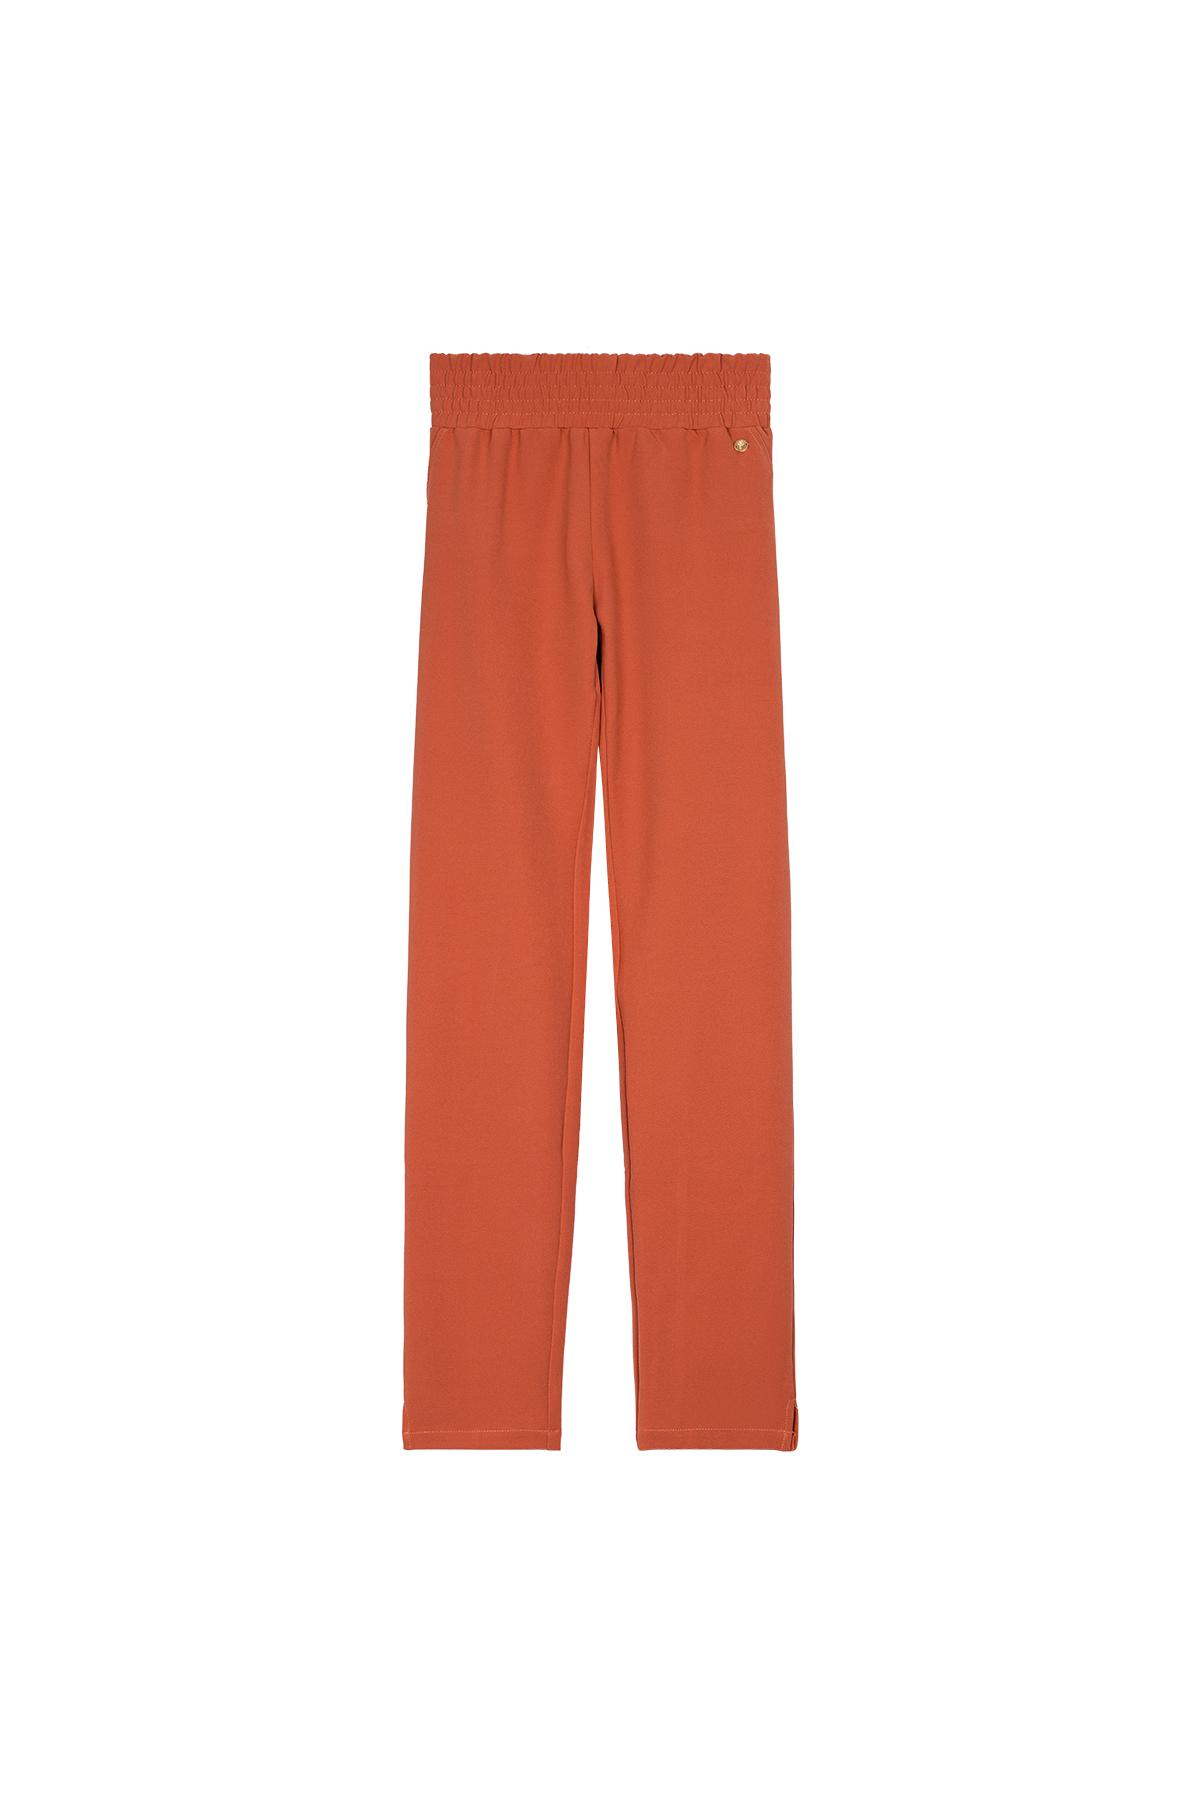 Pantalones ajustados Naranja S